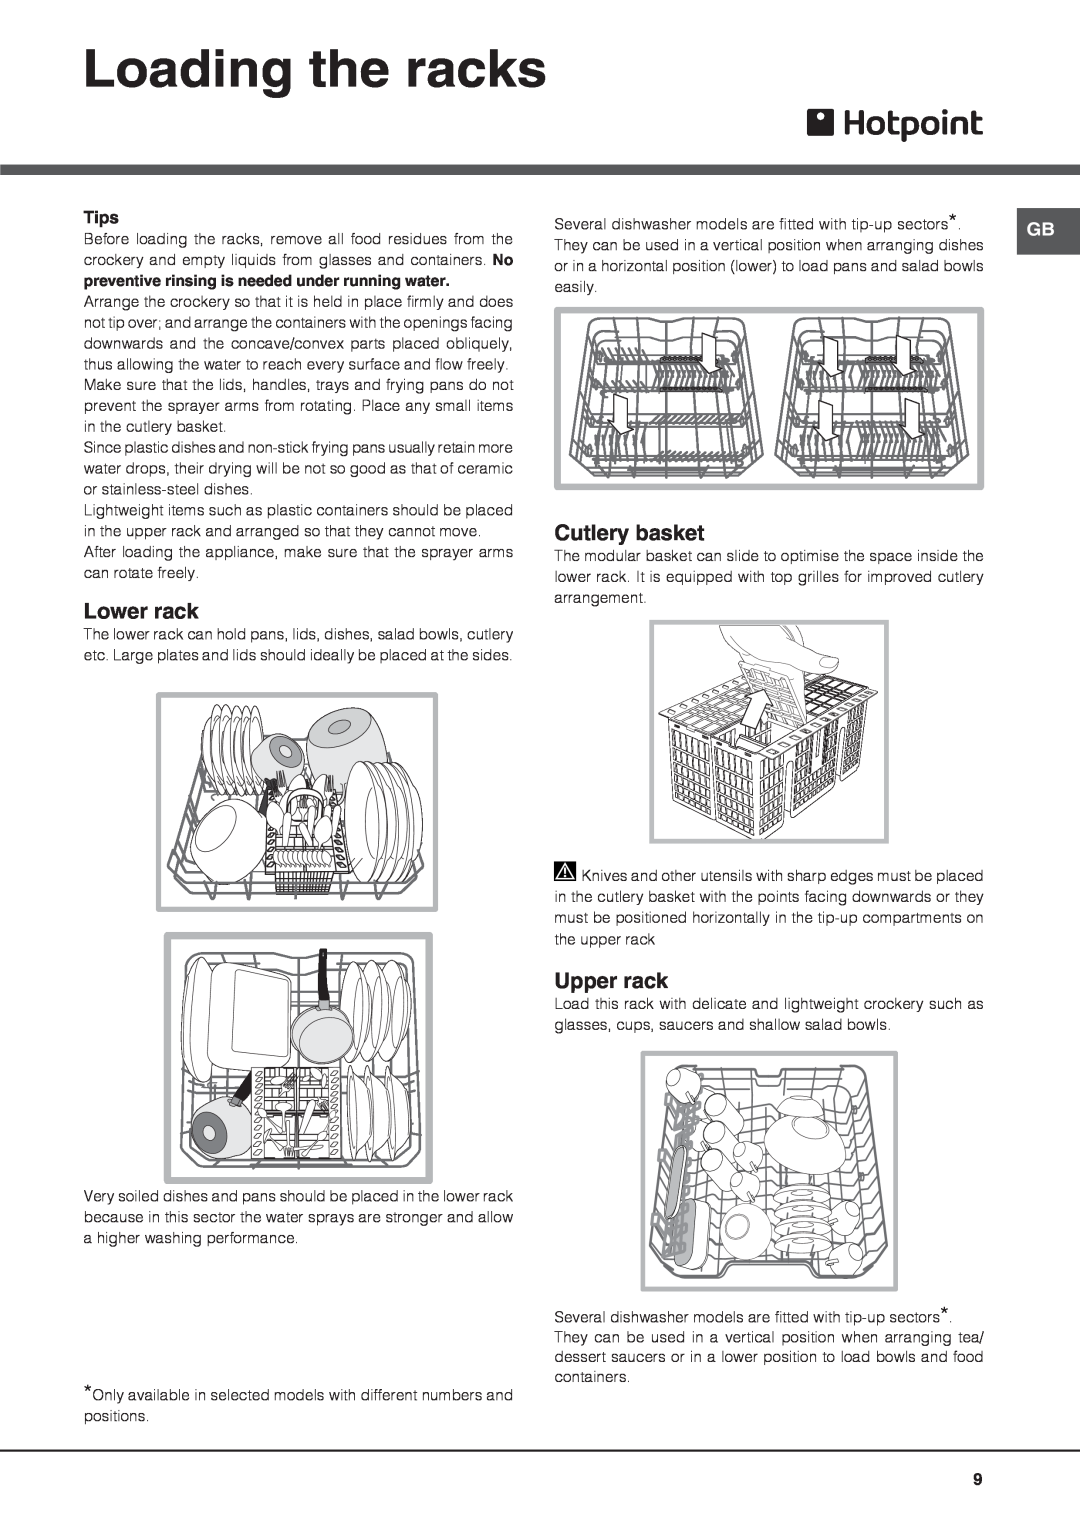 Hotpoint LSB 5B019 manual Loading the racks, Lower rack, Cutlery basket, Upper rack, Tips 